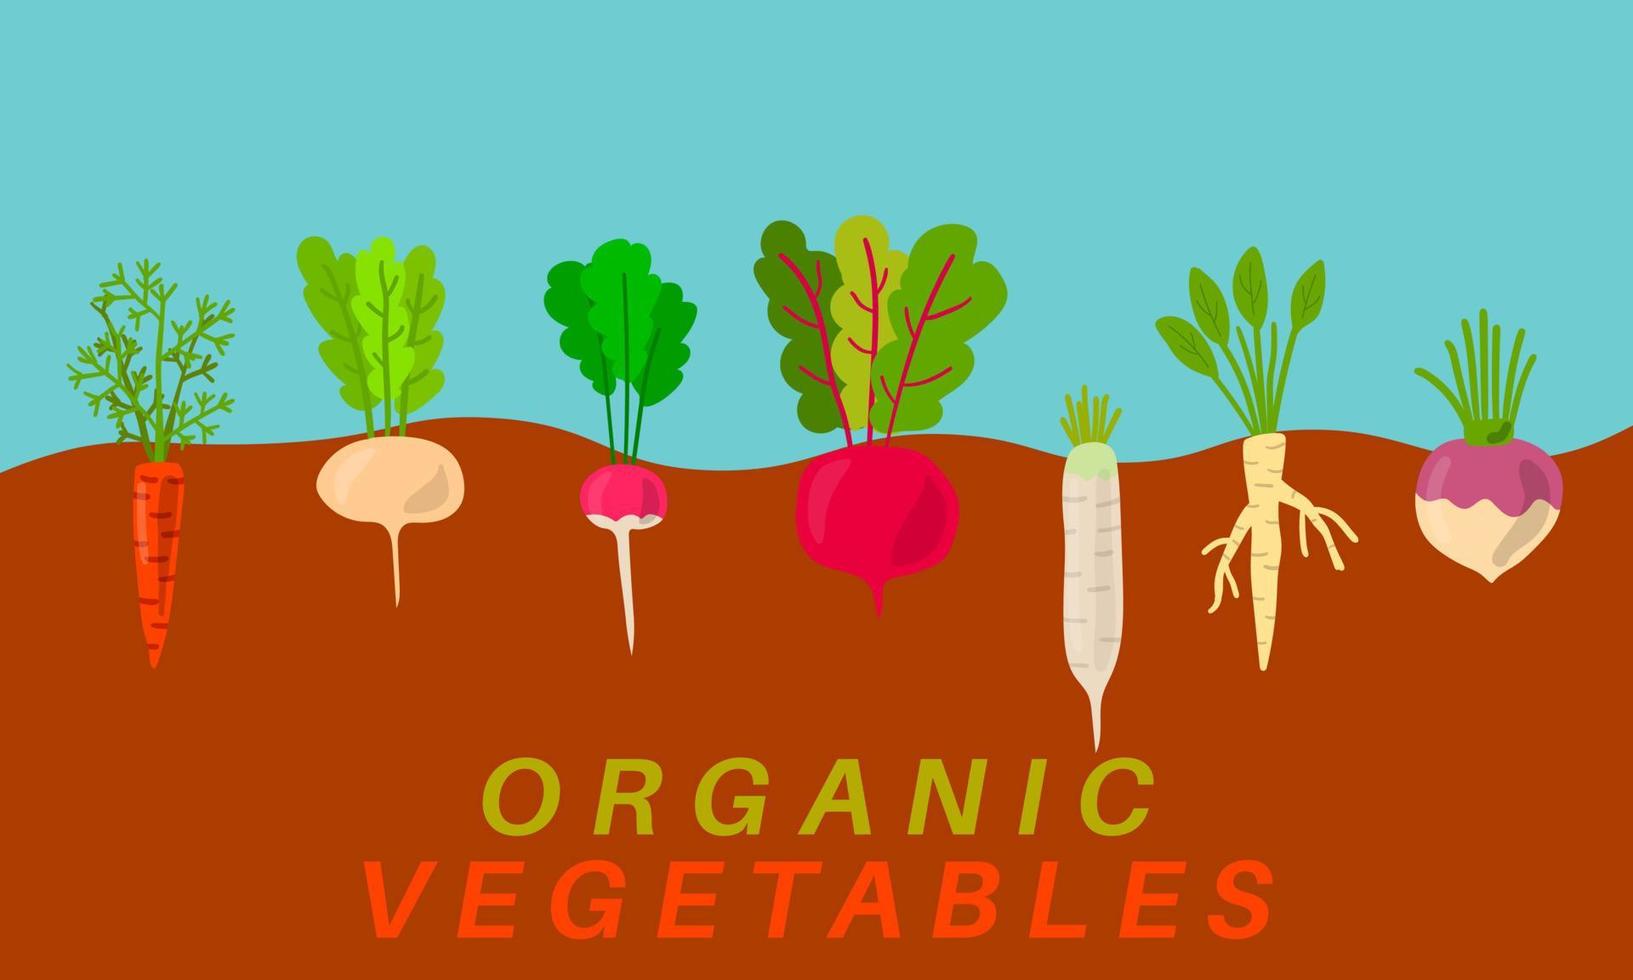 Organic vegetables garden growing. Vegetable gardening sketch. Plants showing root structure below ground level, veggies growing and planting. vector